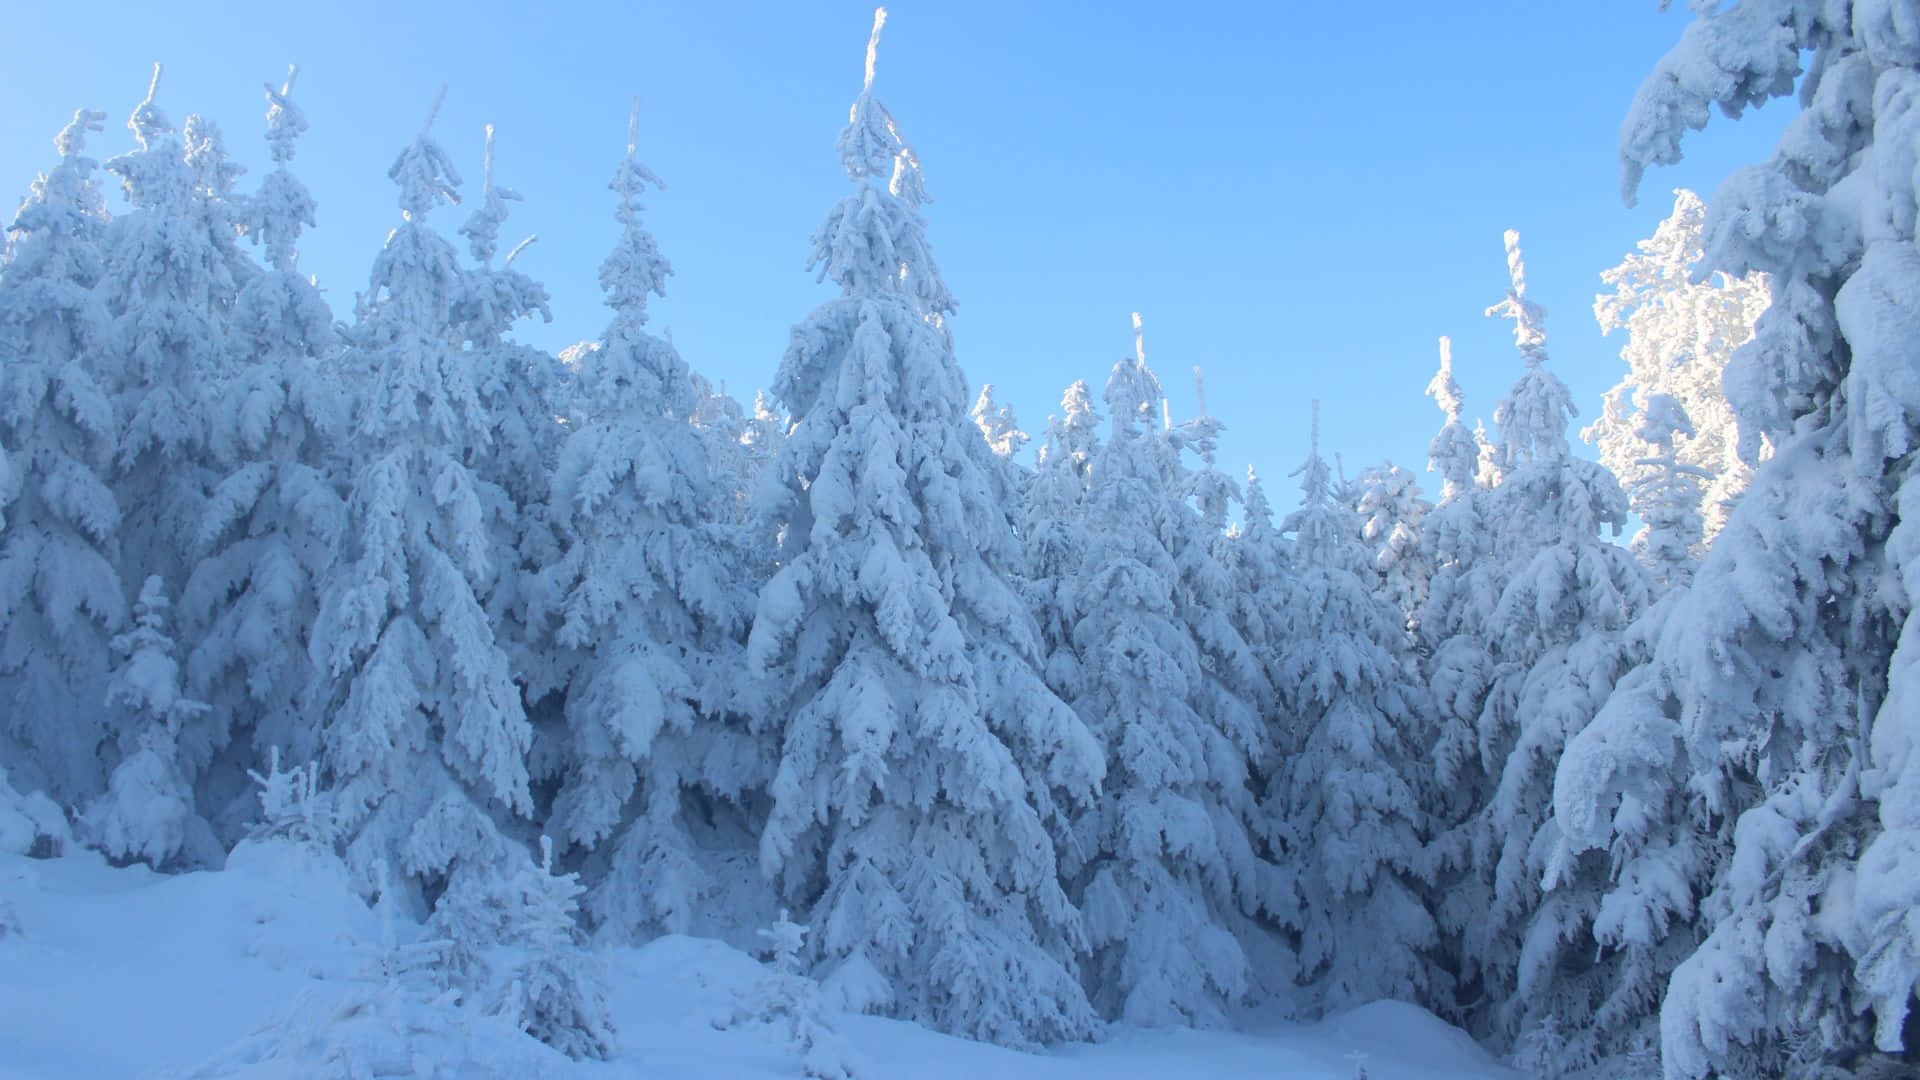 Caption: Frosty Winter Morning Background